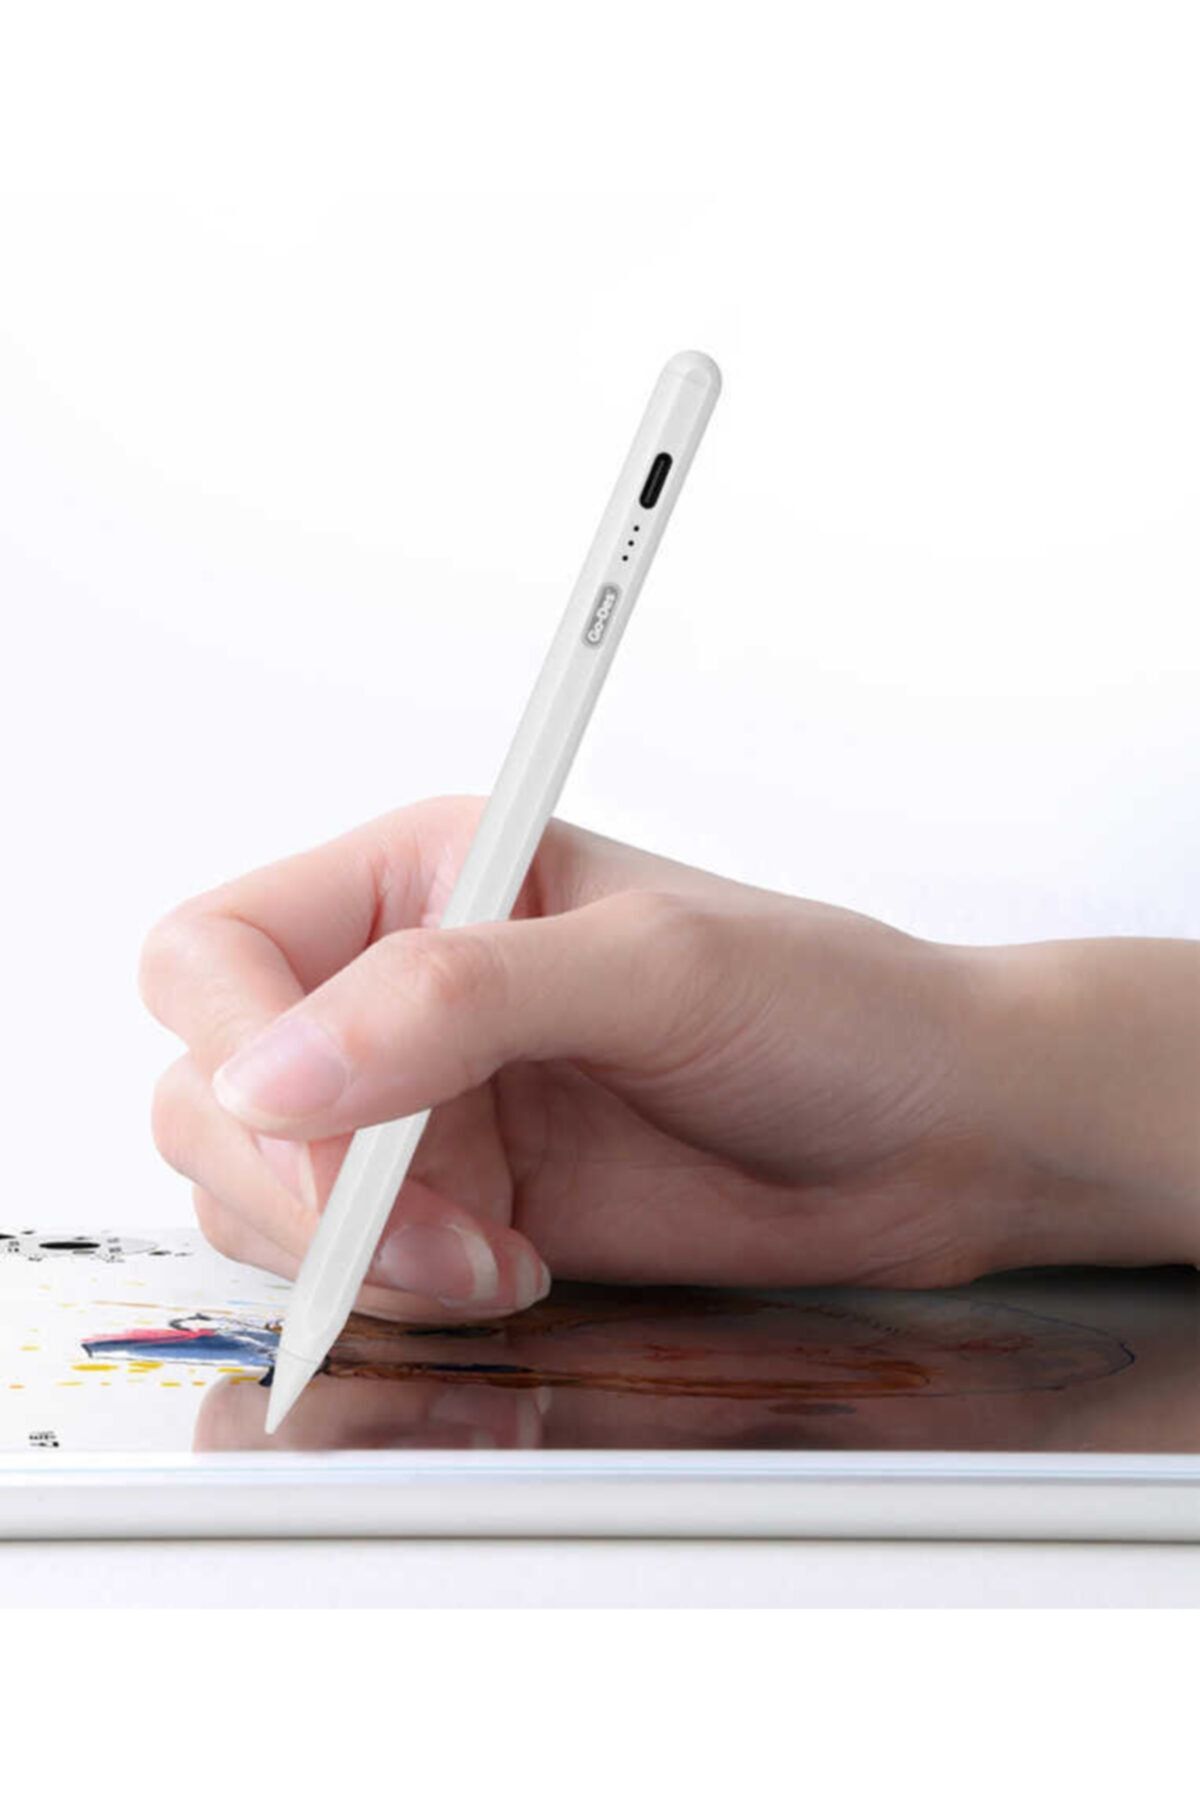 HopyKent Ipad Pro 11 Inç (3. Nesil) Dokunmatik Kalem Hassas Çizim Ve Not Tutmak Için Palm Rejection Özellikli